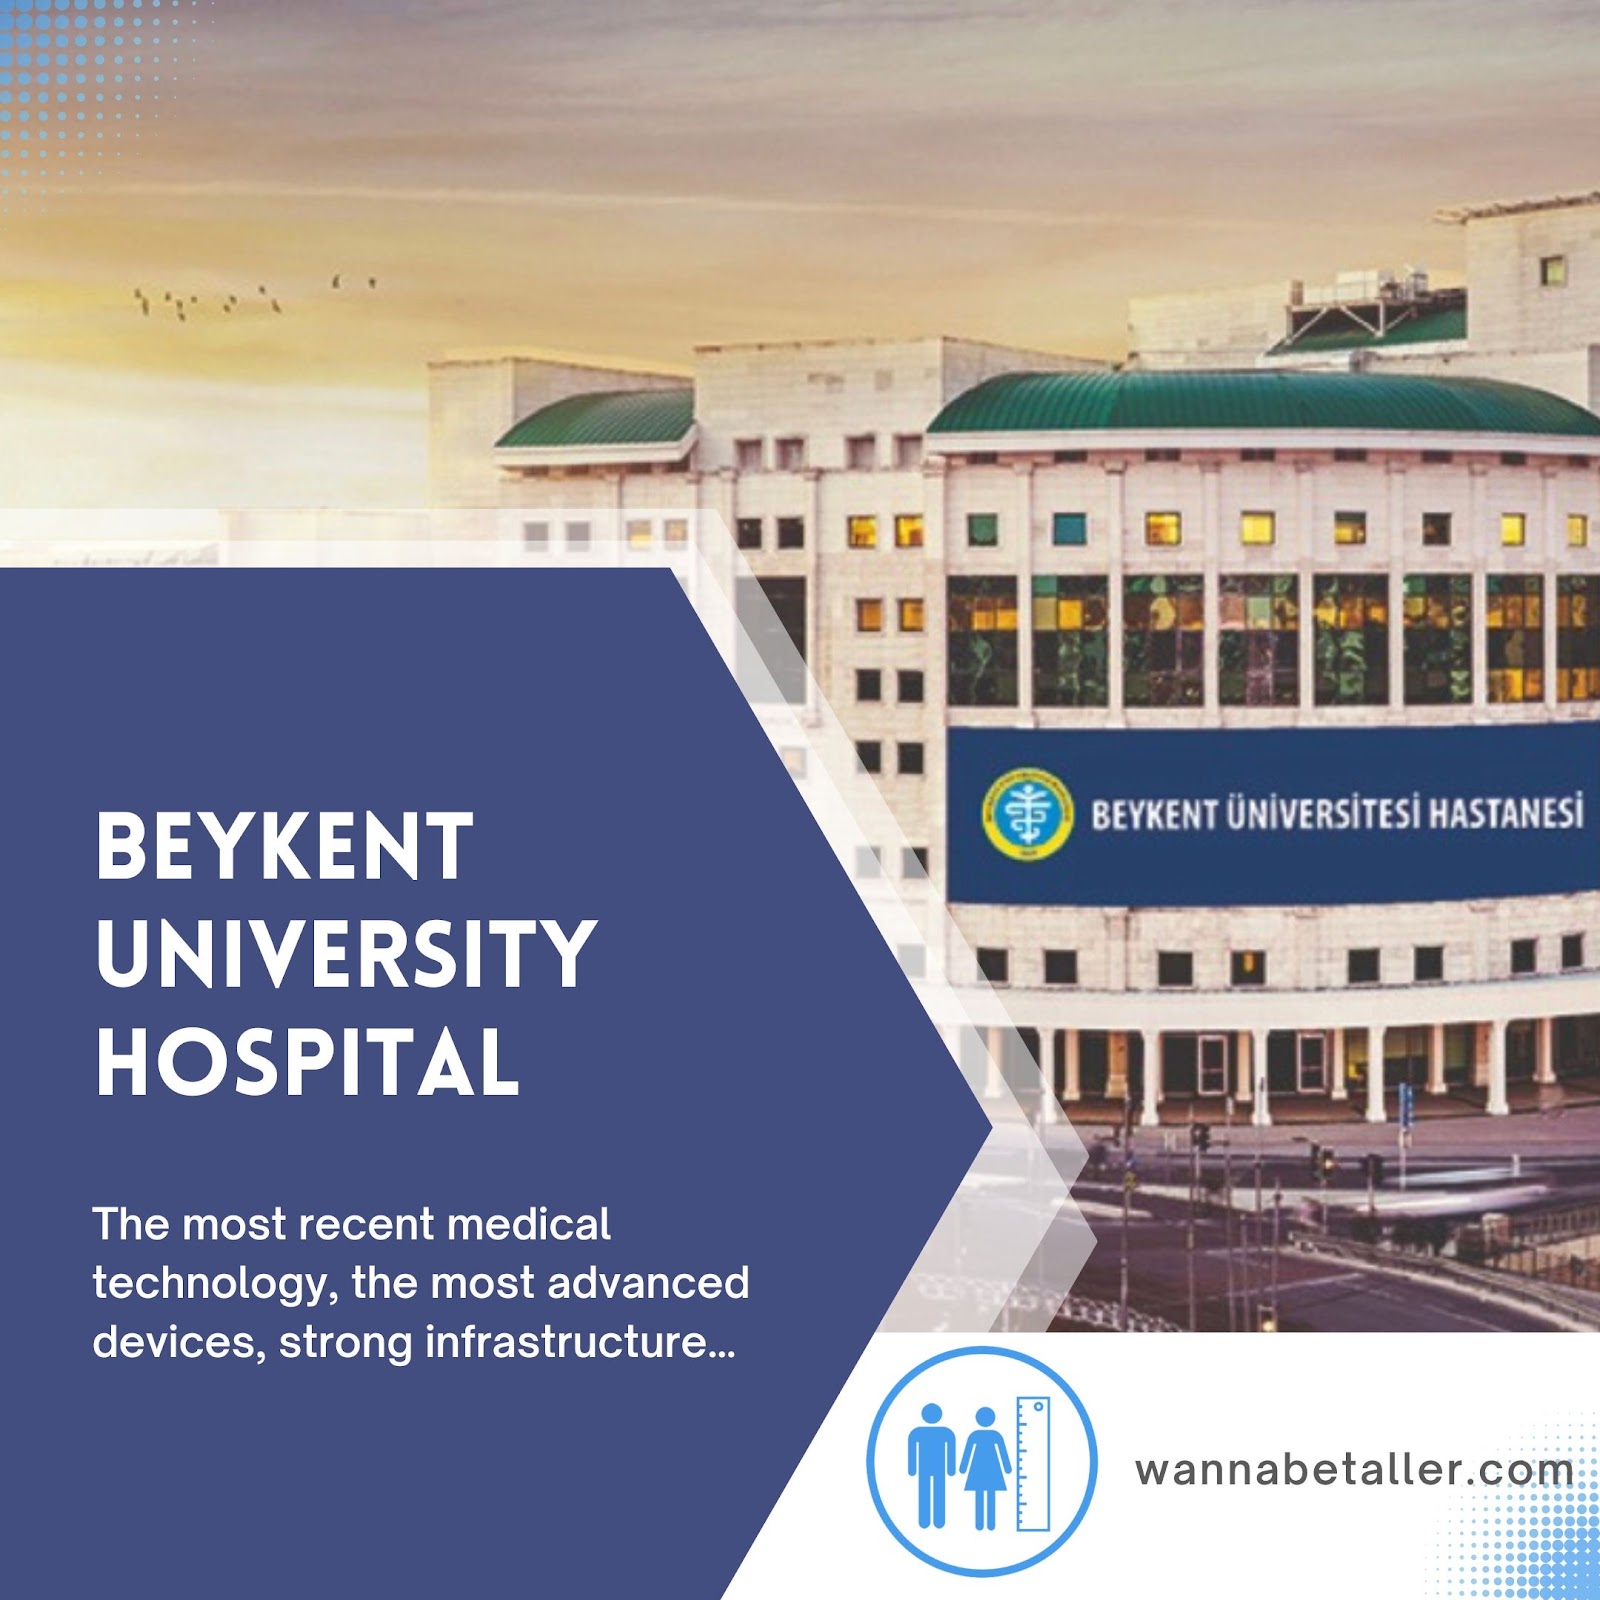 Beykent University Hospital